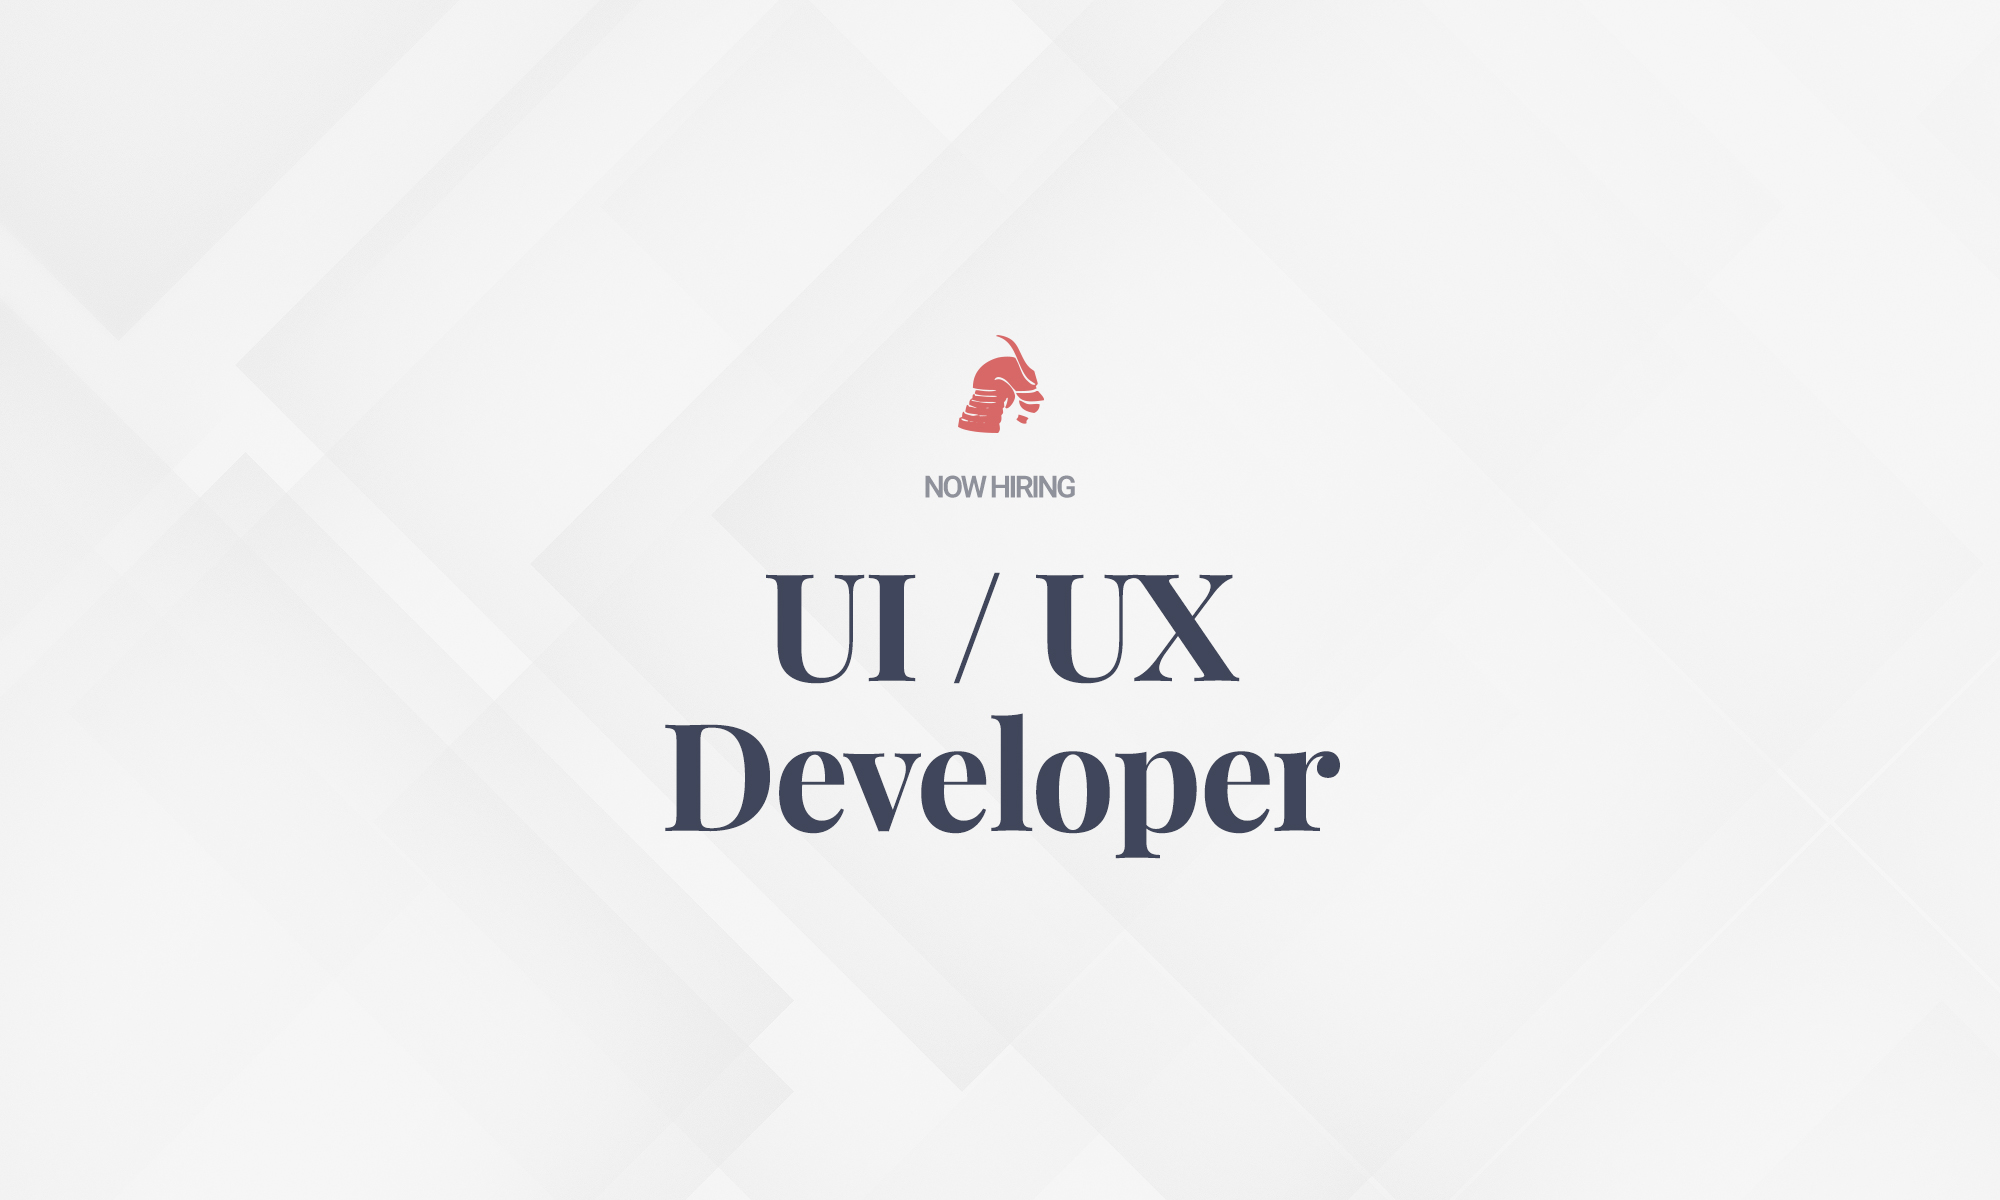 Jobs: Now Hiring UI/UX Developer